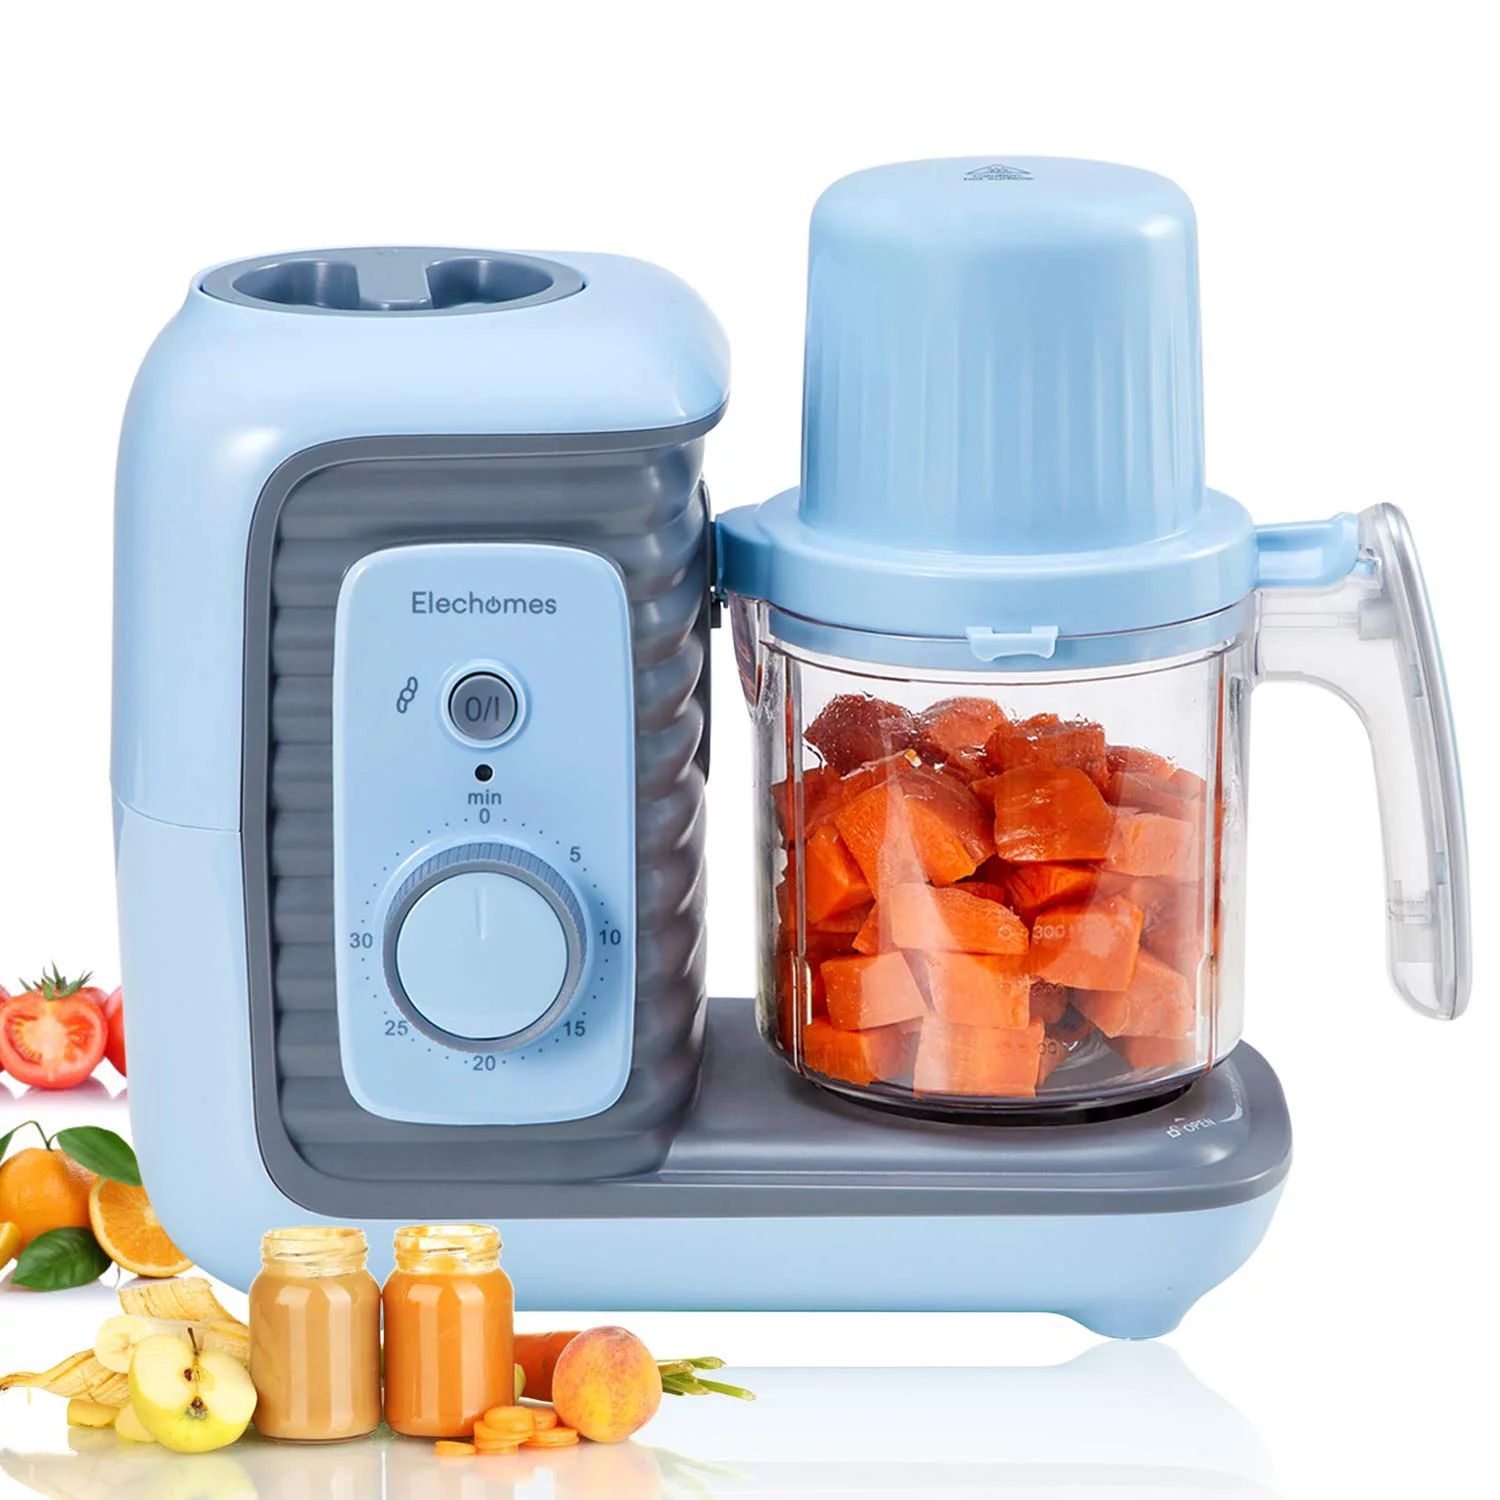 Baby Food Maker, 8 in 1 Elechomes Baby Food Processor Blender Grinder Steamer, for Healthy Homema... | Walmart (US)